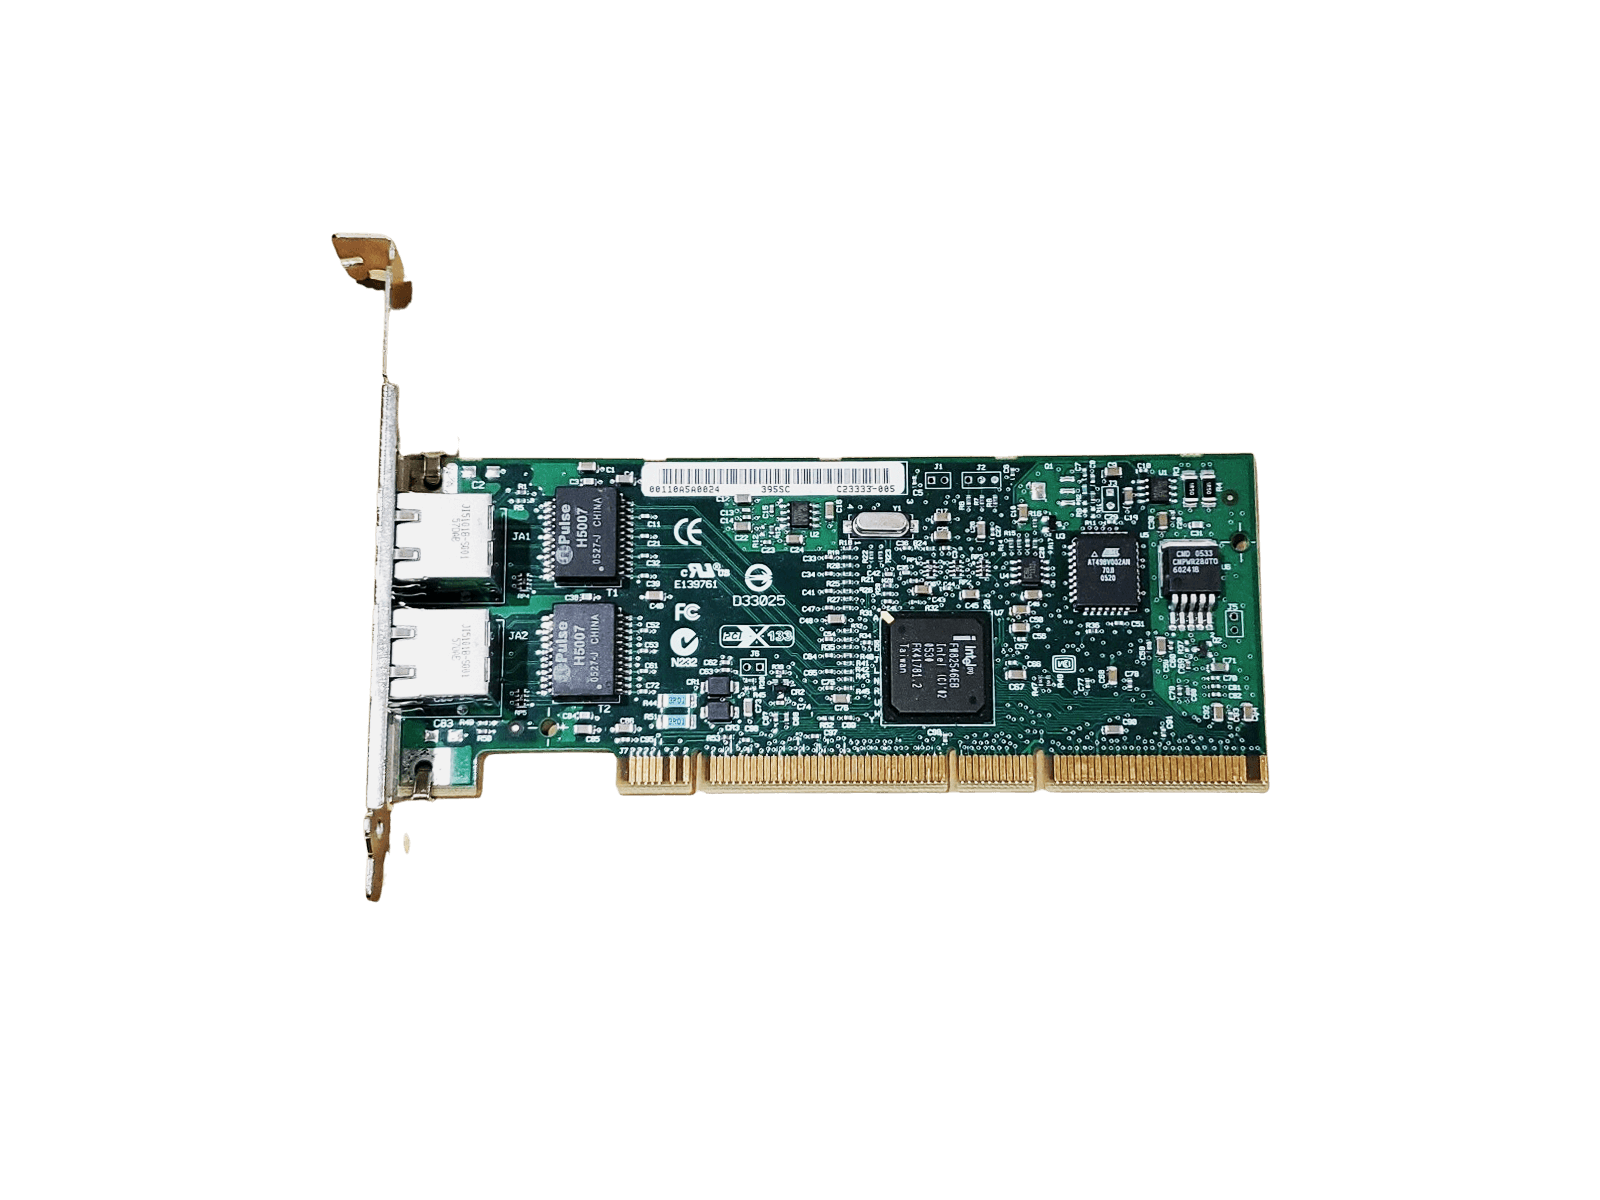 HP NC7170 Dual Port PCI-X 10 100 1000 Gigabit Adapter Card NIC RJ45 Full Height.